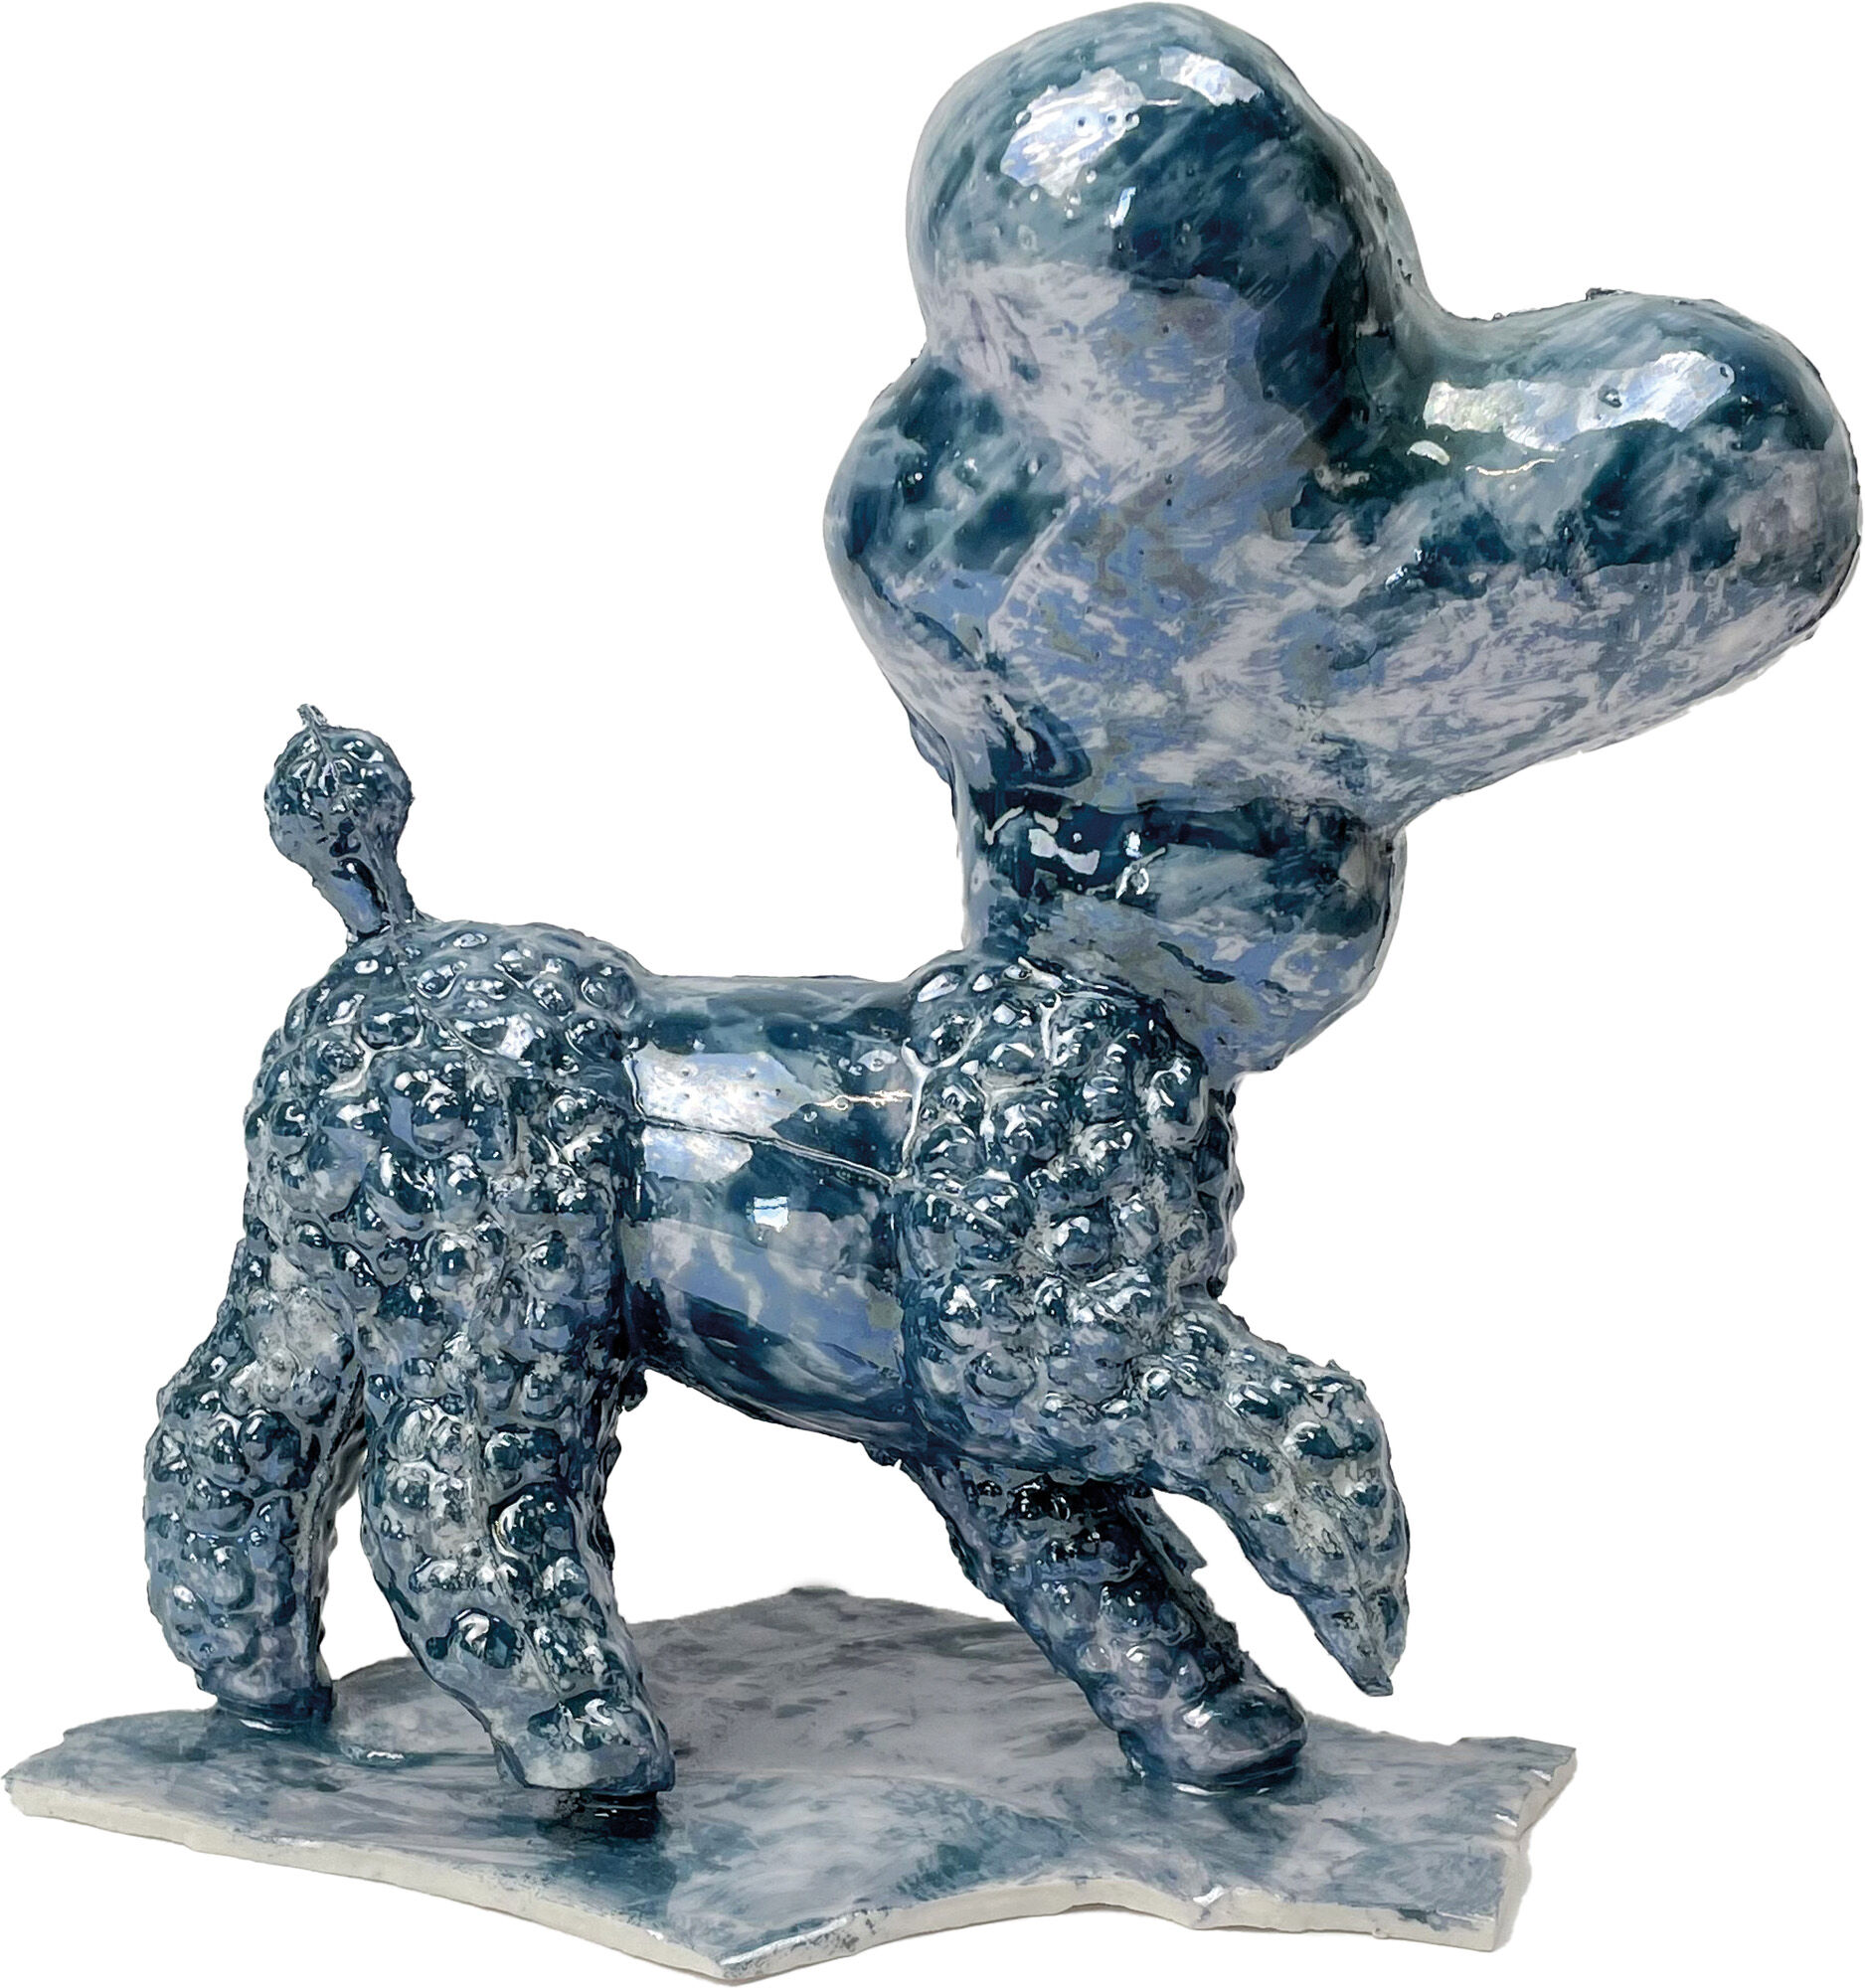 Sculpture "Tipsy" (2020), porcelain by Hannes Uhlenhaut